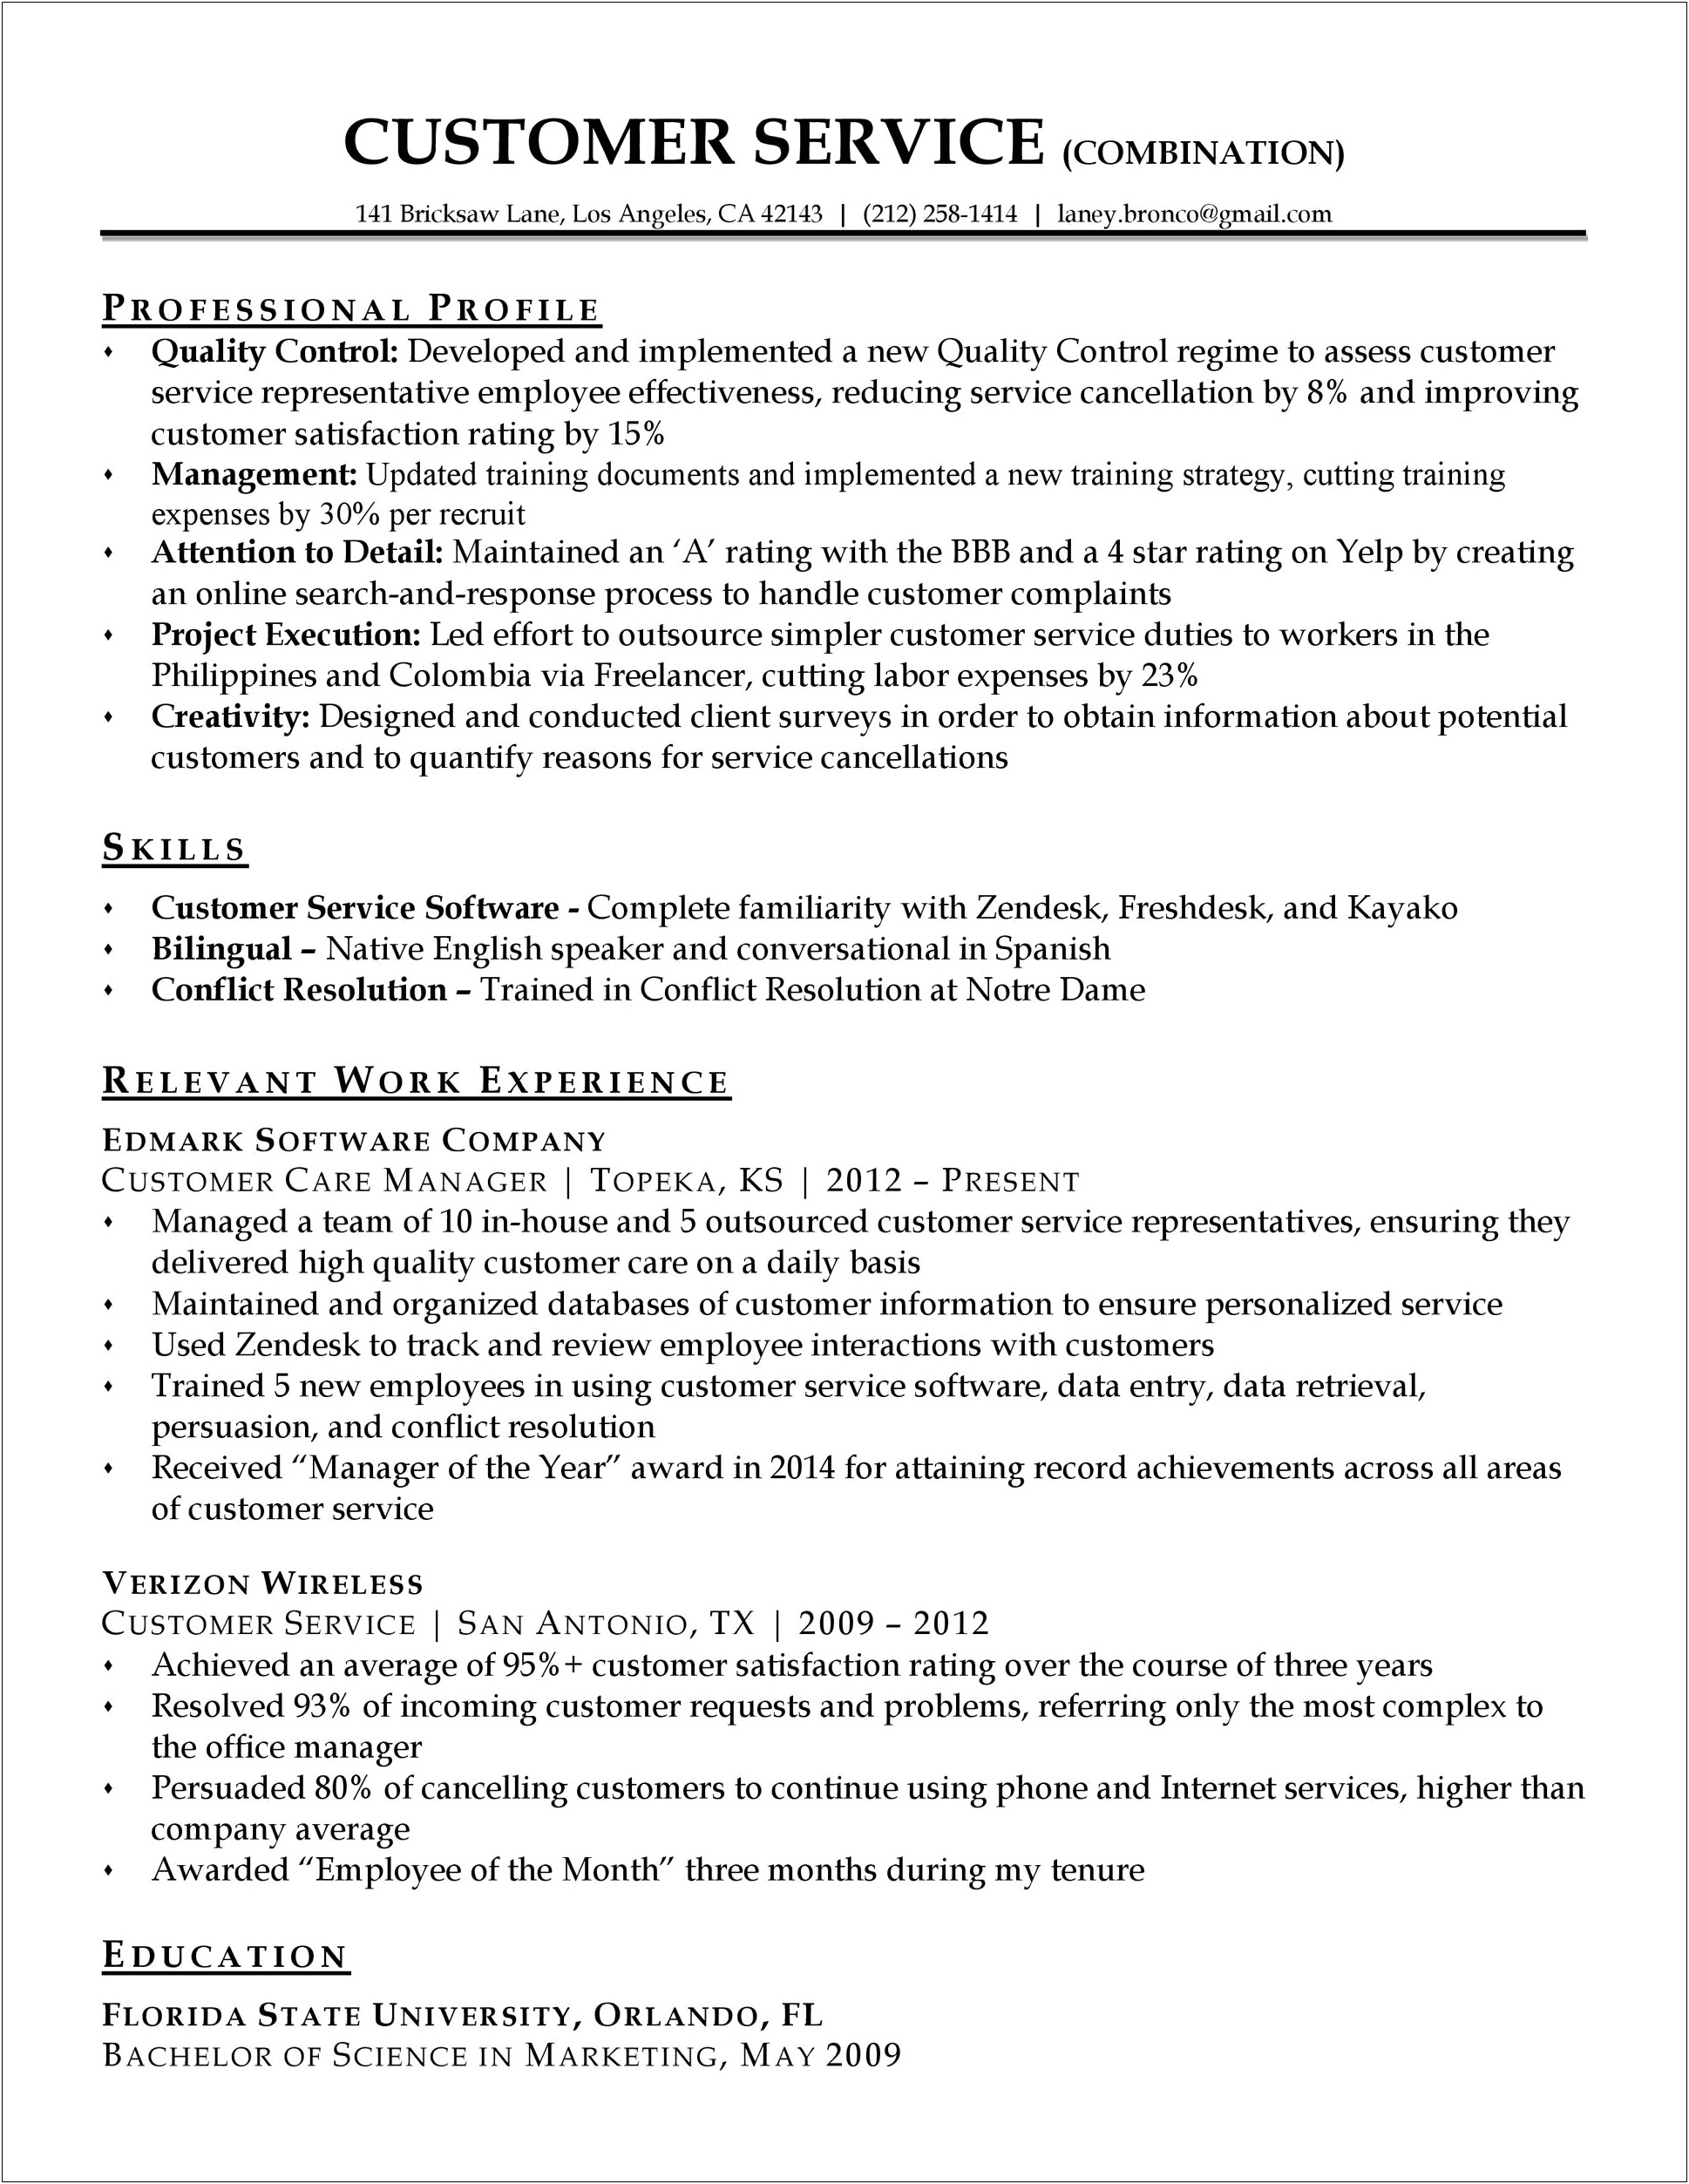 Sample Resume For Call Center Agent Undergraduate